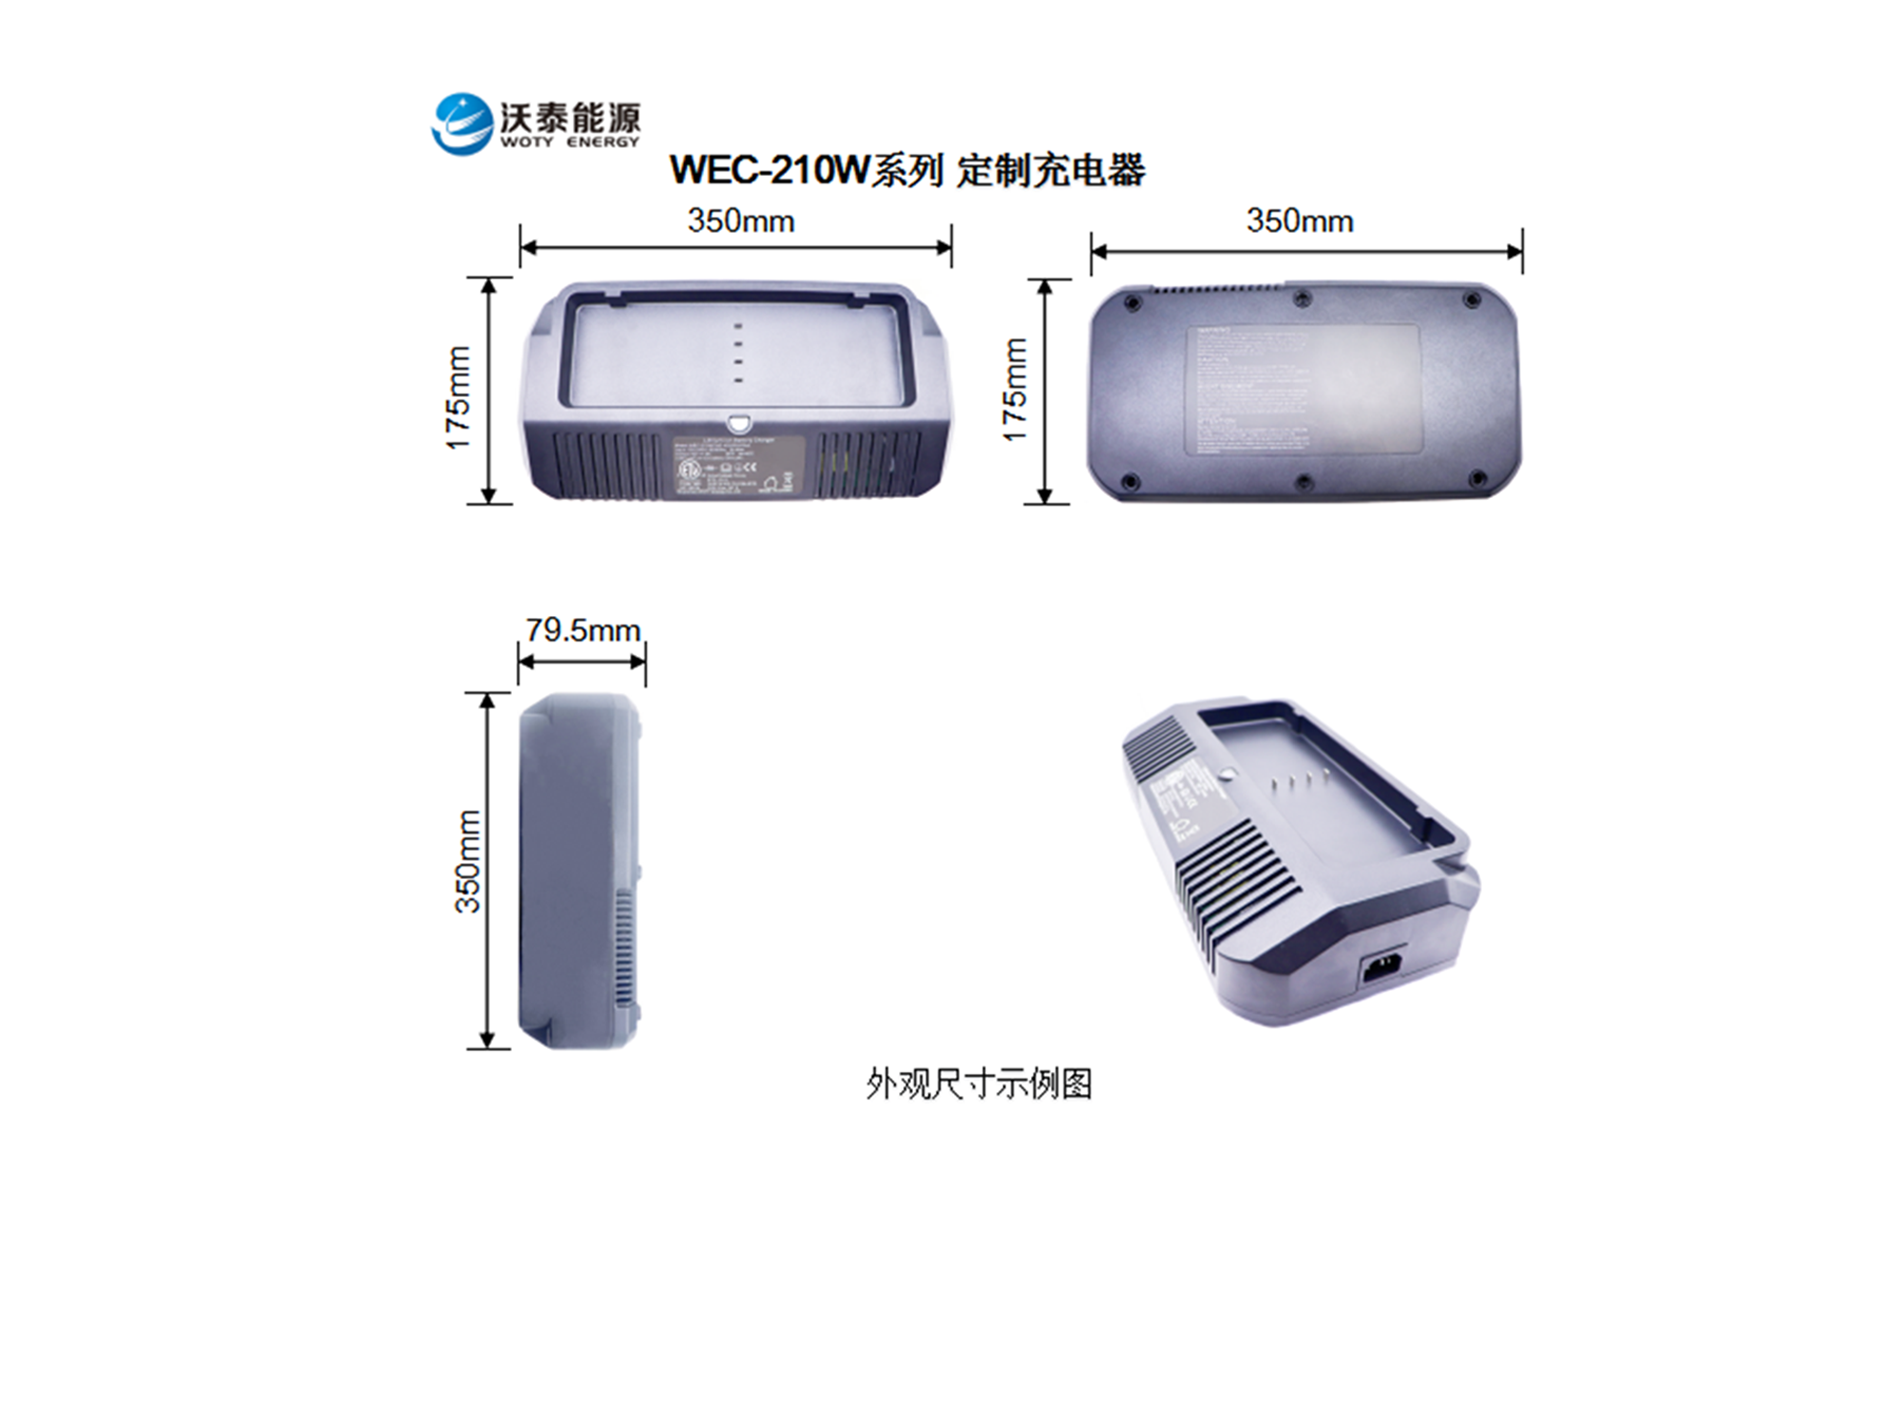 WEC-210W series, custom charger